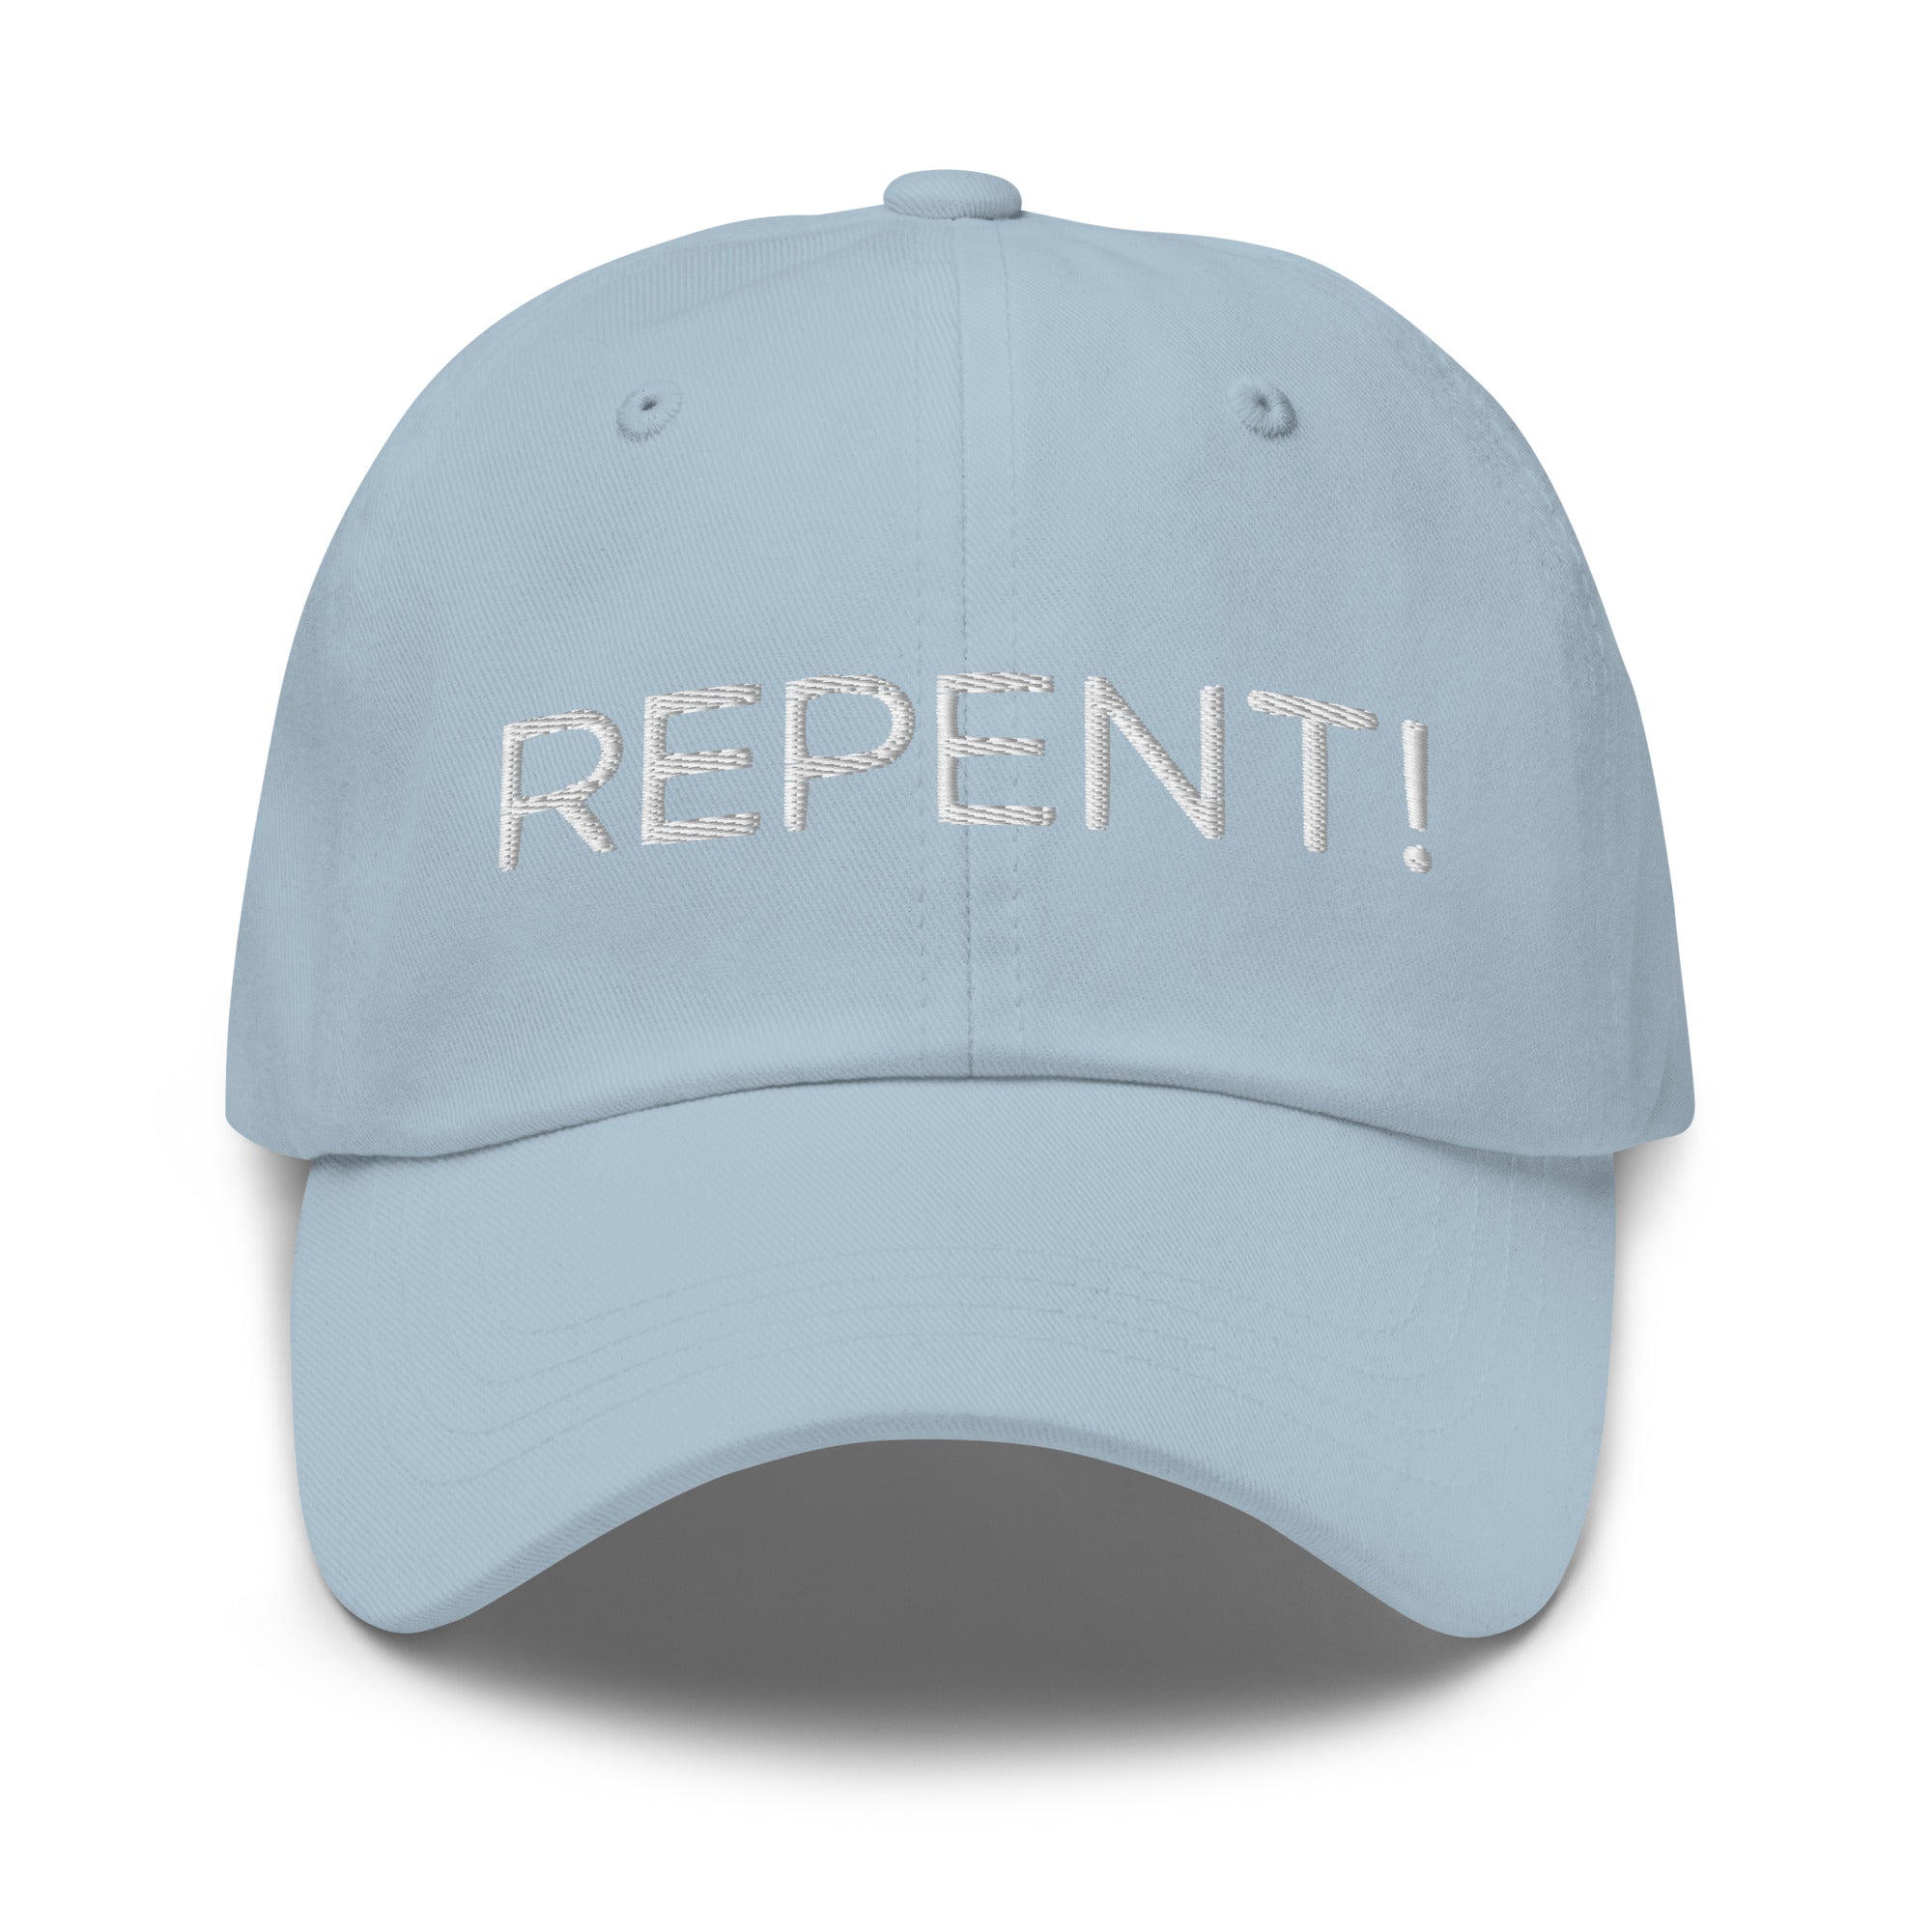 REPENT HAT